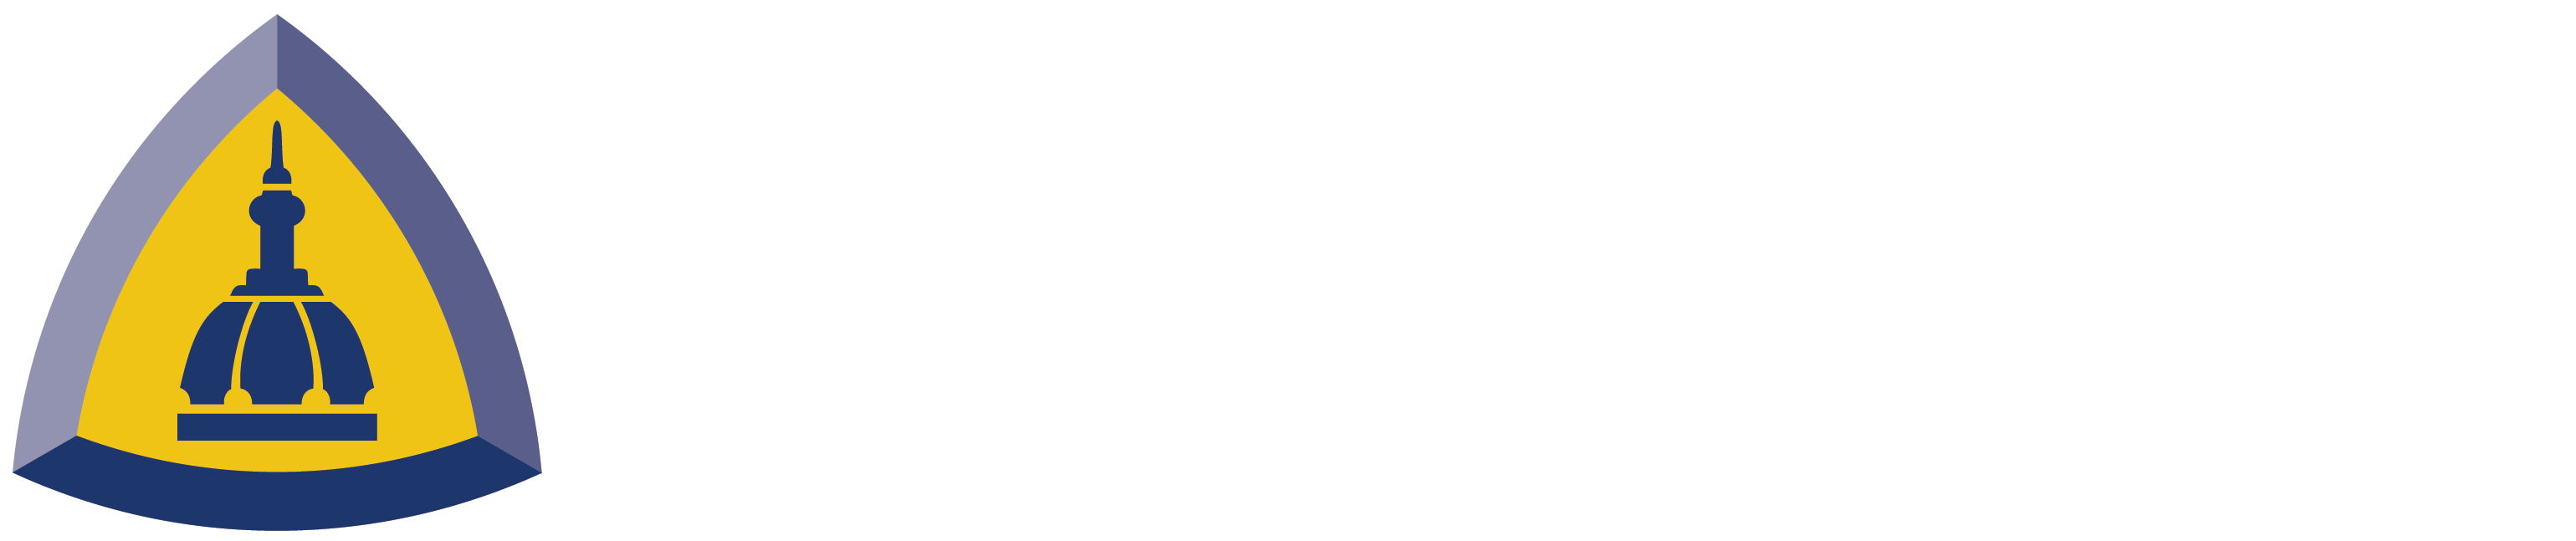 jhm_logos